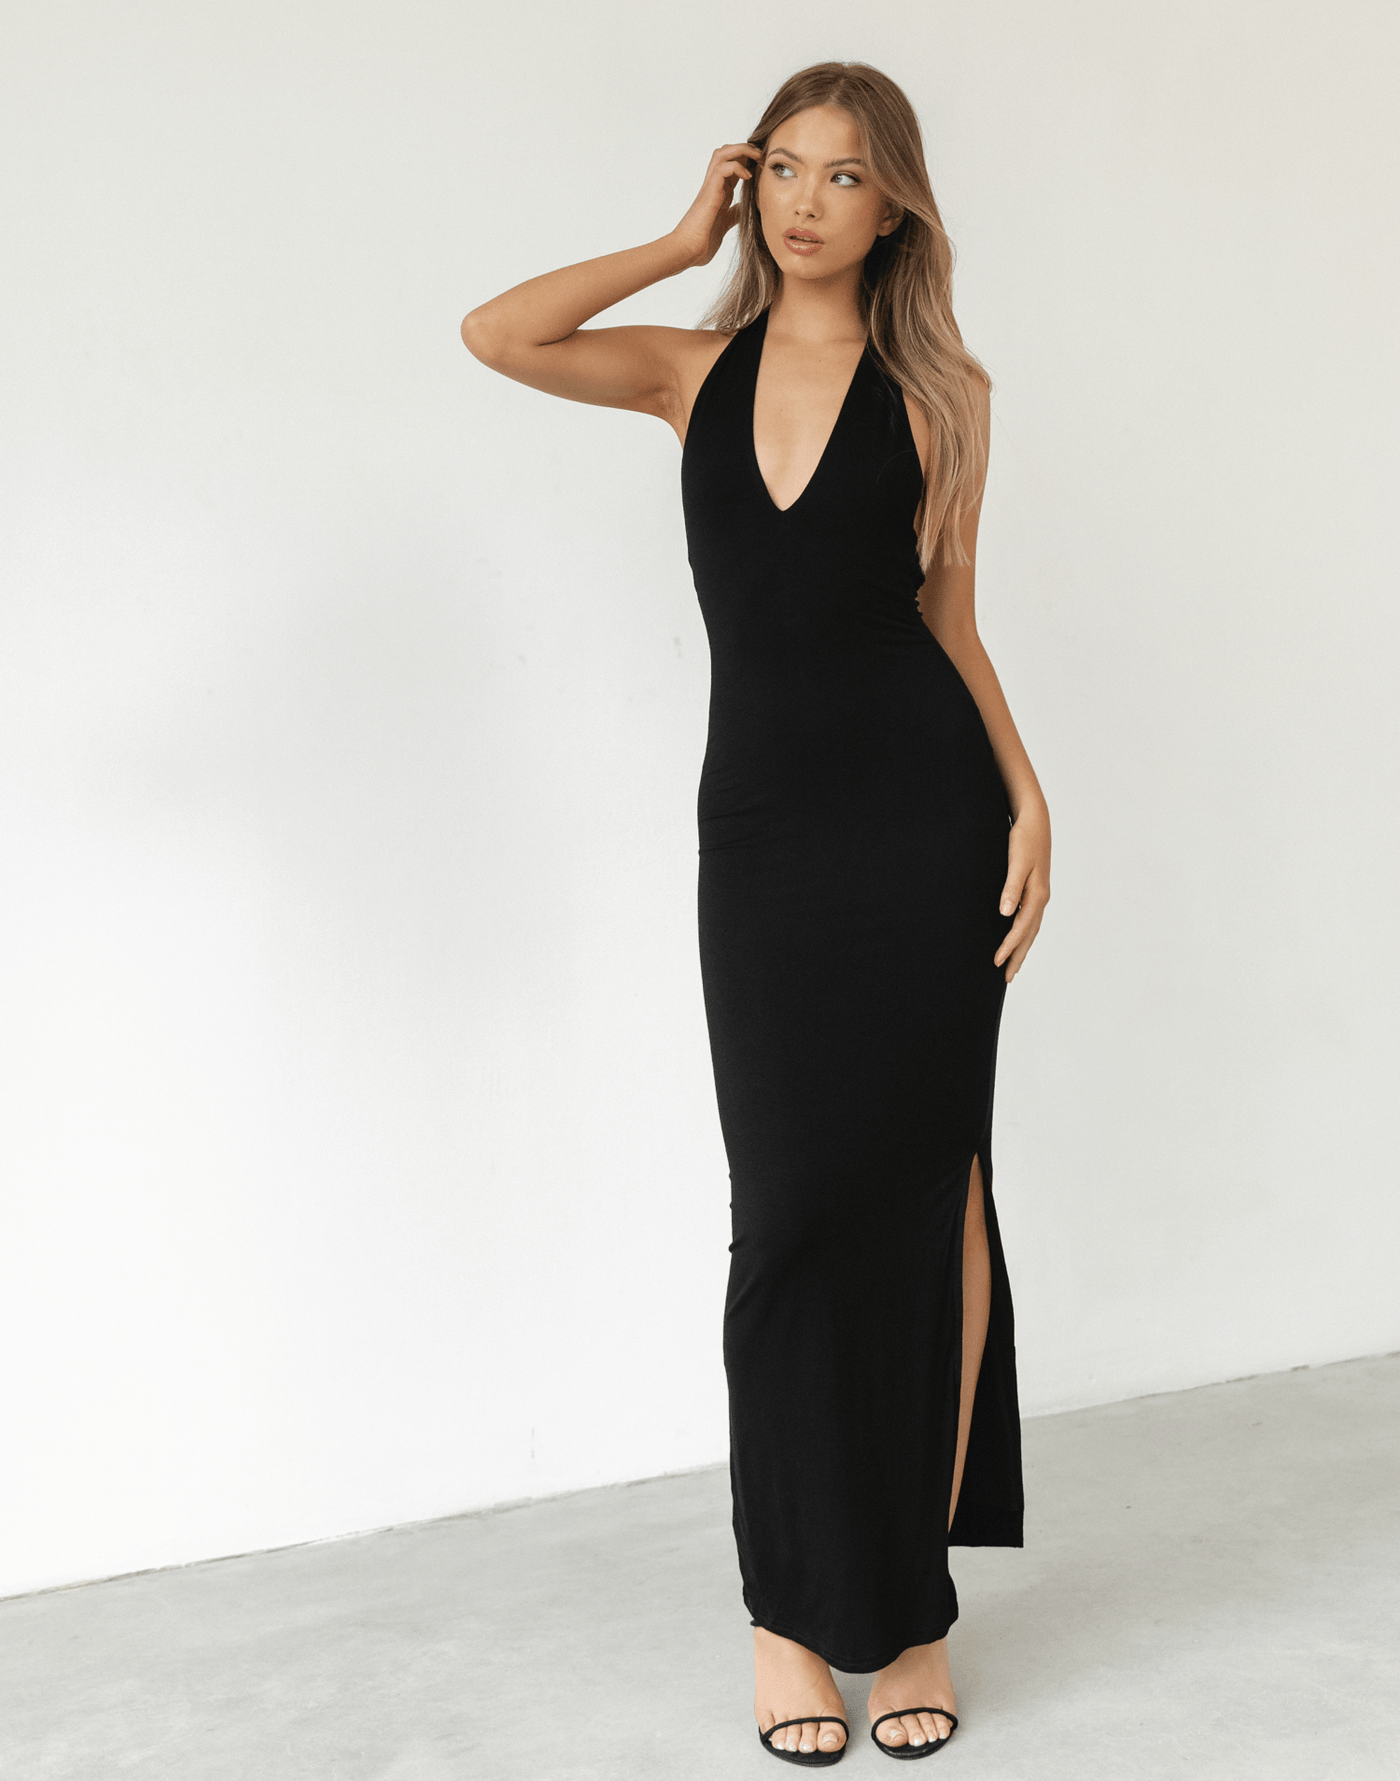 Valetta Maxi Dress (Black) - Black Maxi Dress - Women's Dress - Charcoal Clothing